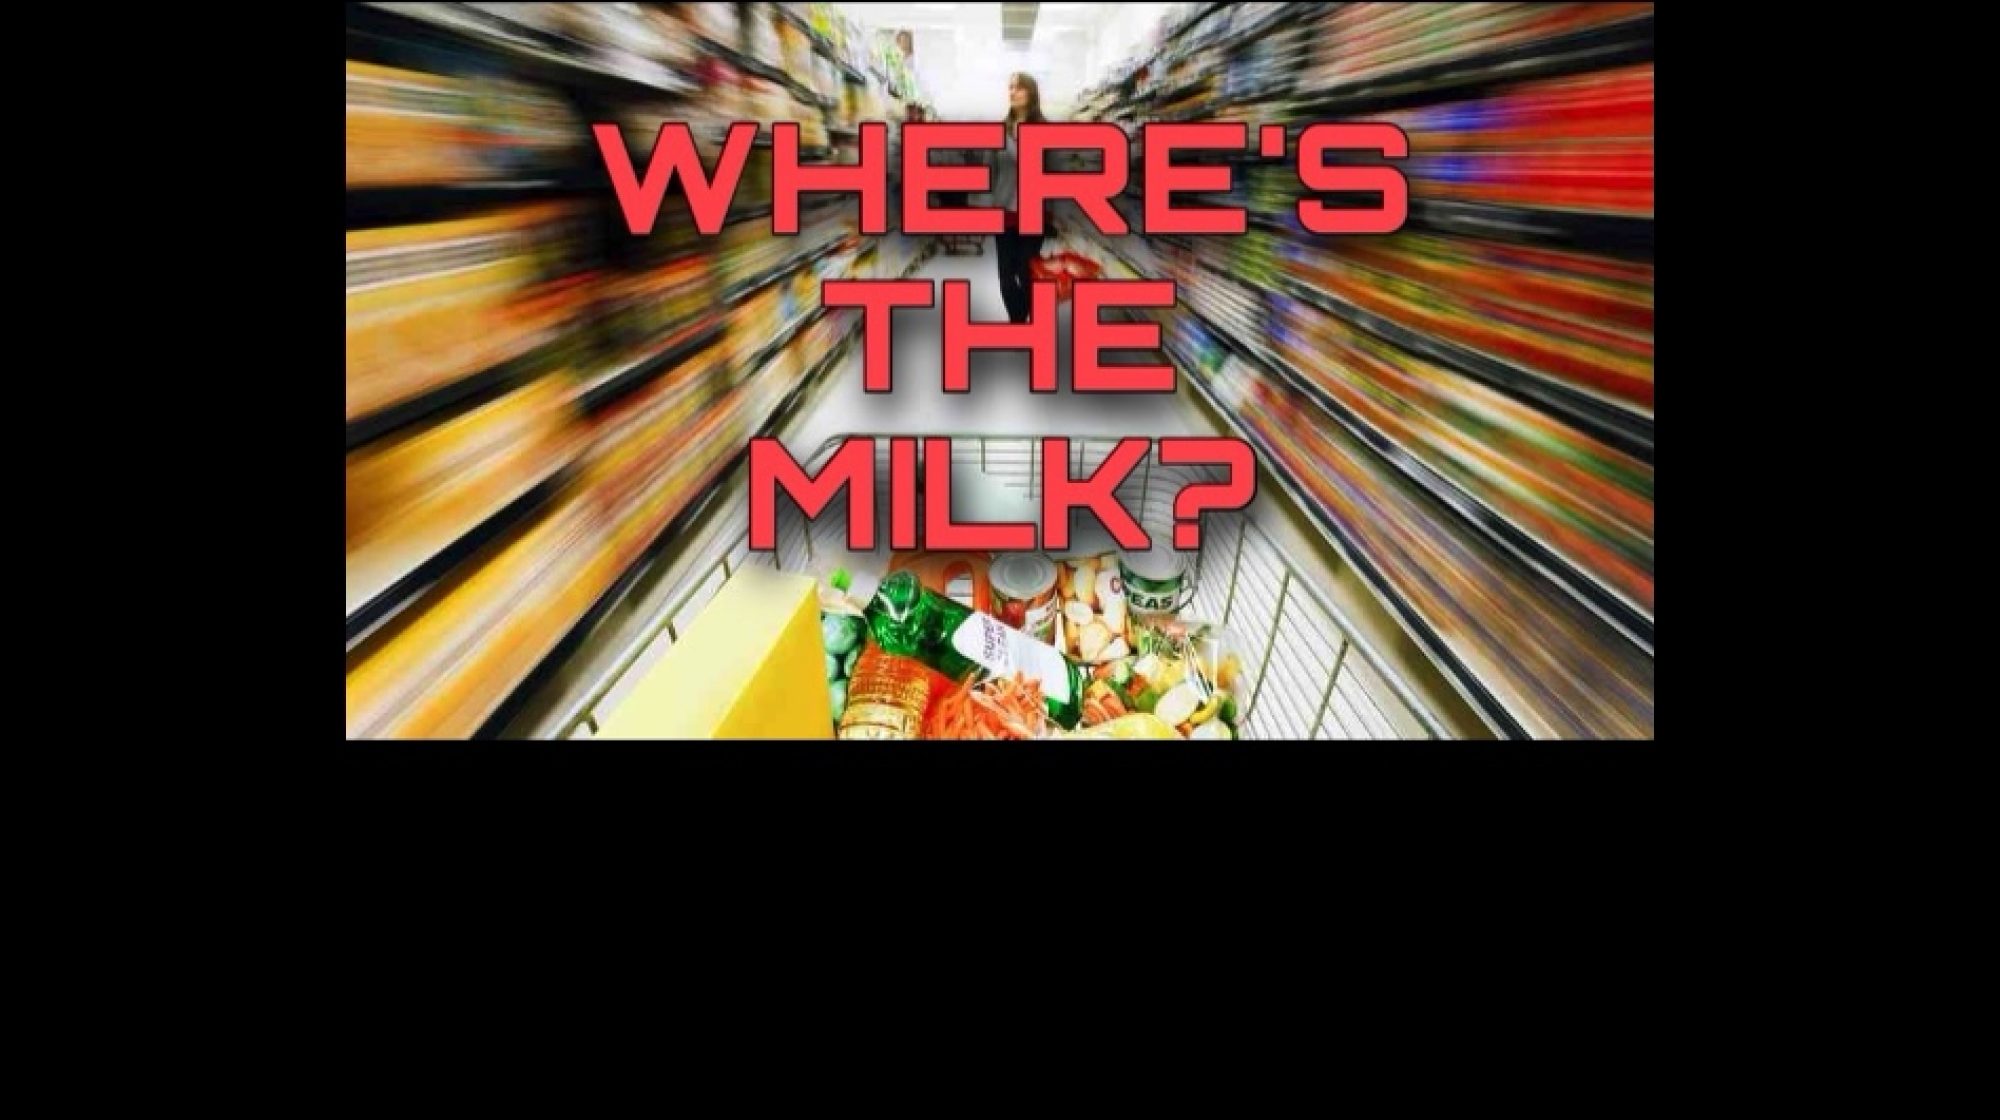 Team B0: Where's the Milk?